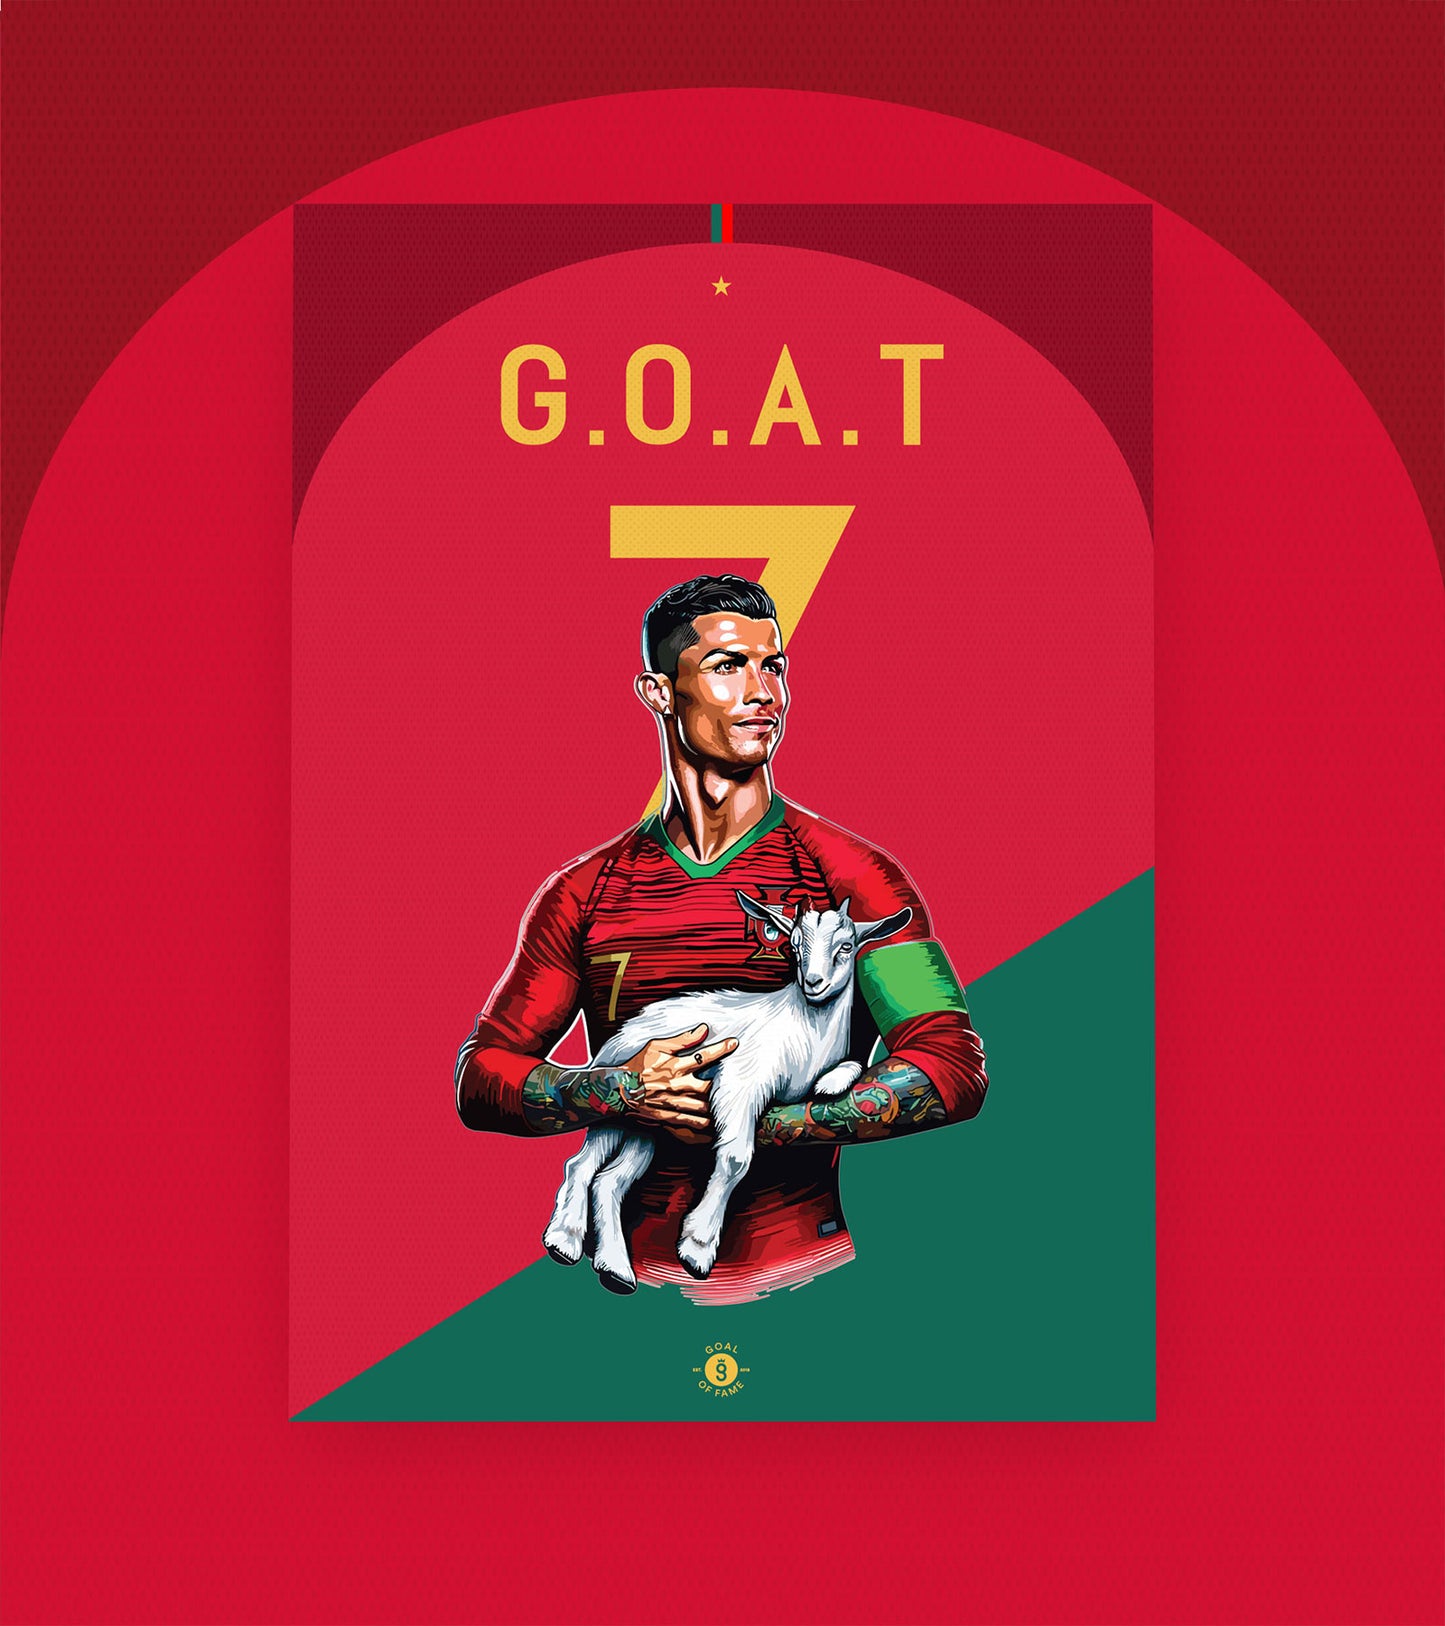 Ronaldo is the G.O.A.T.